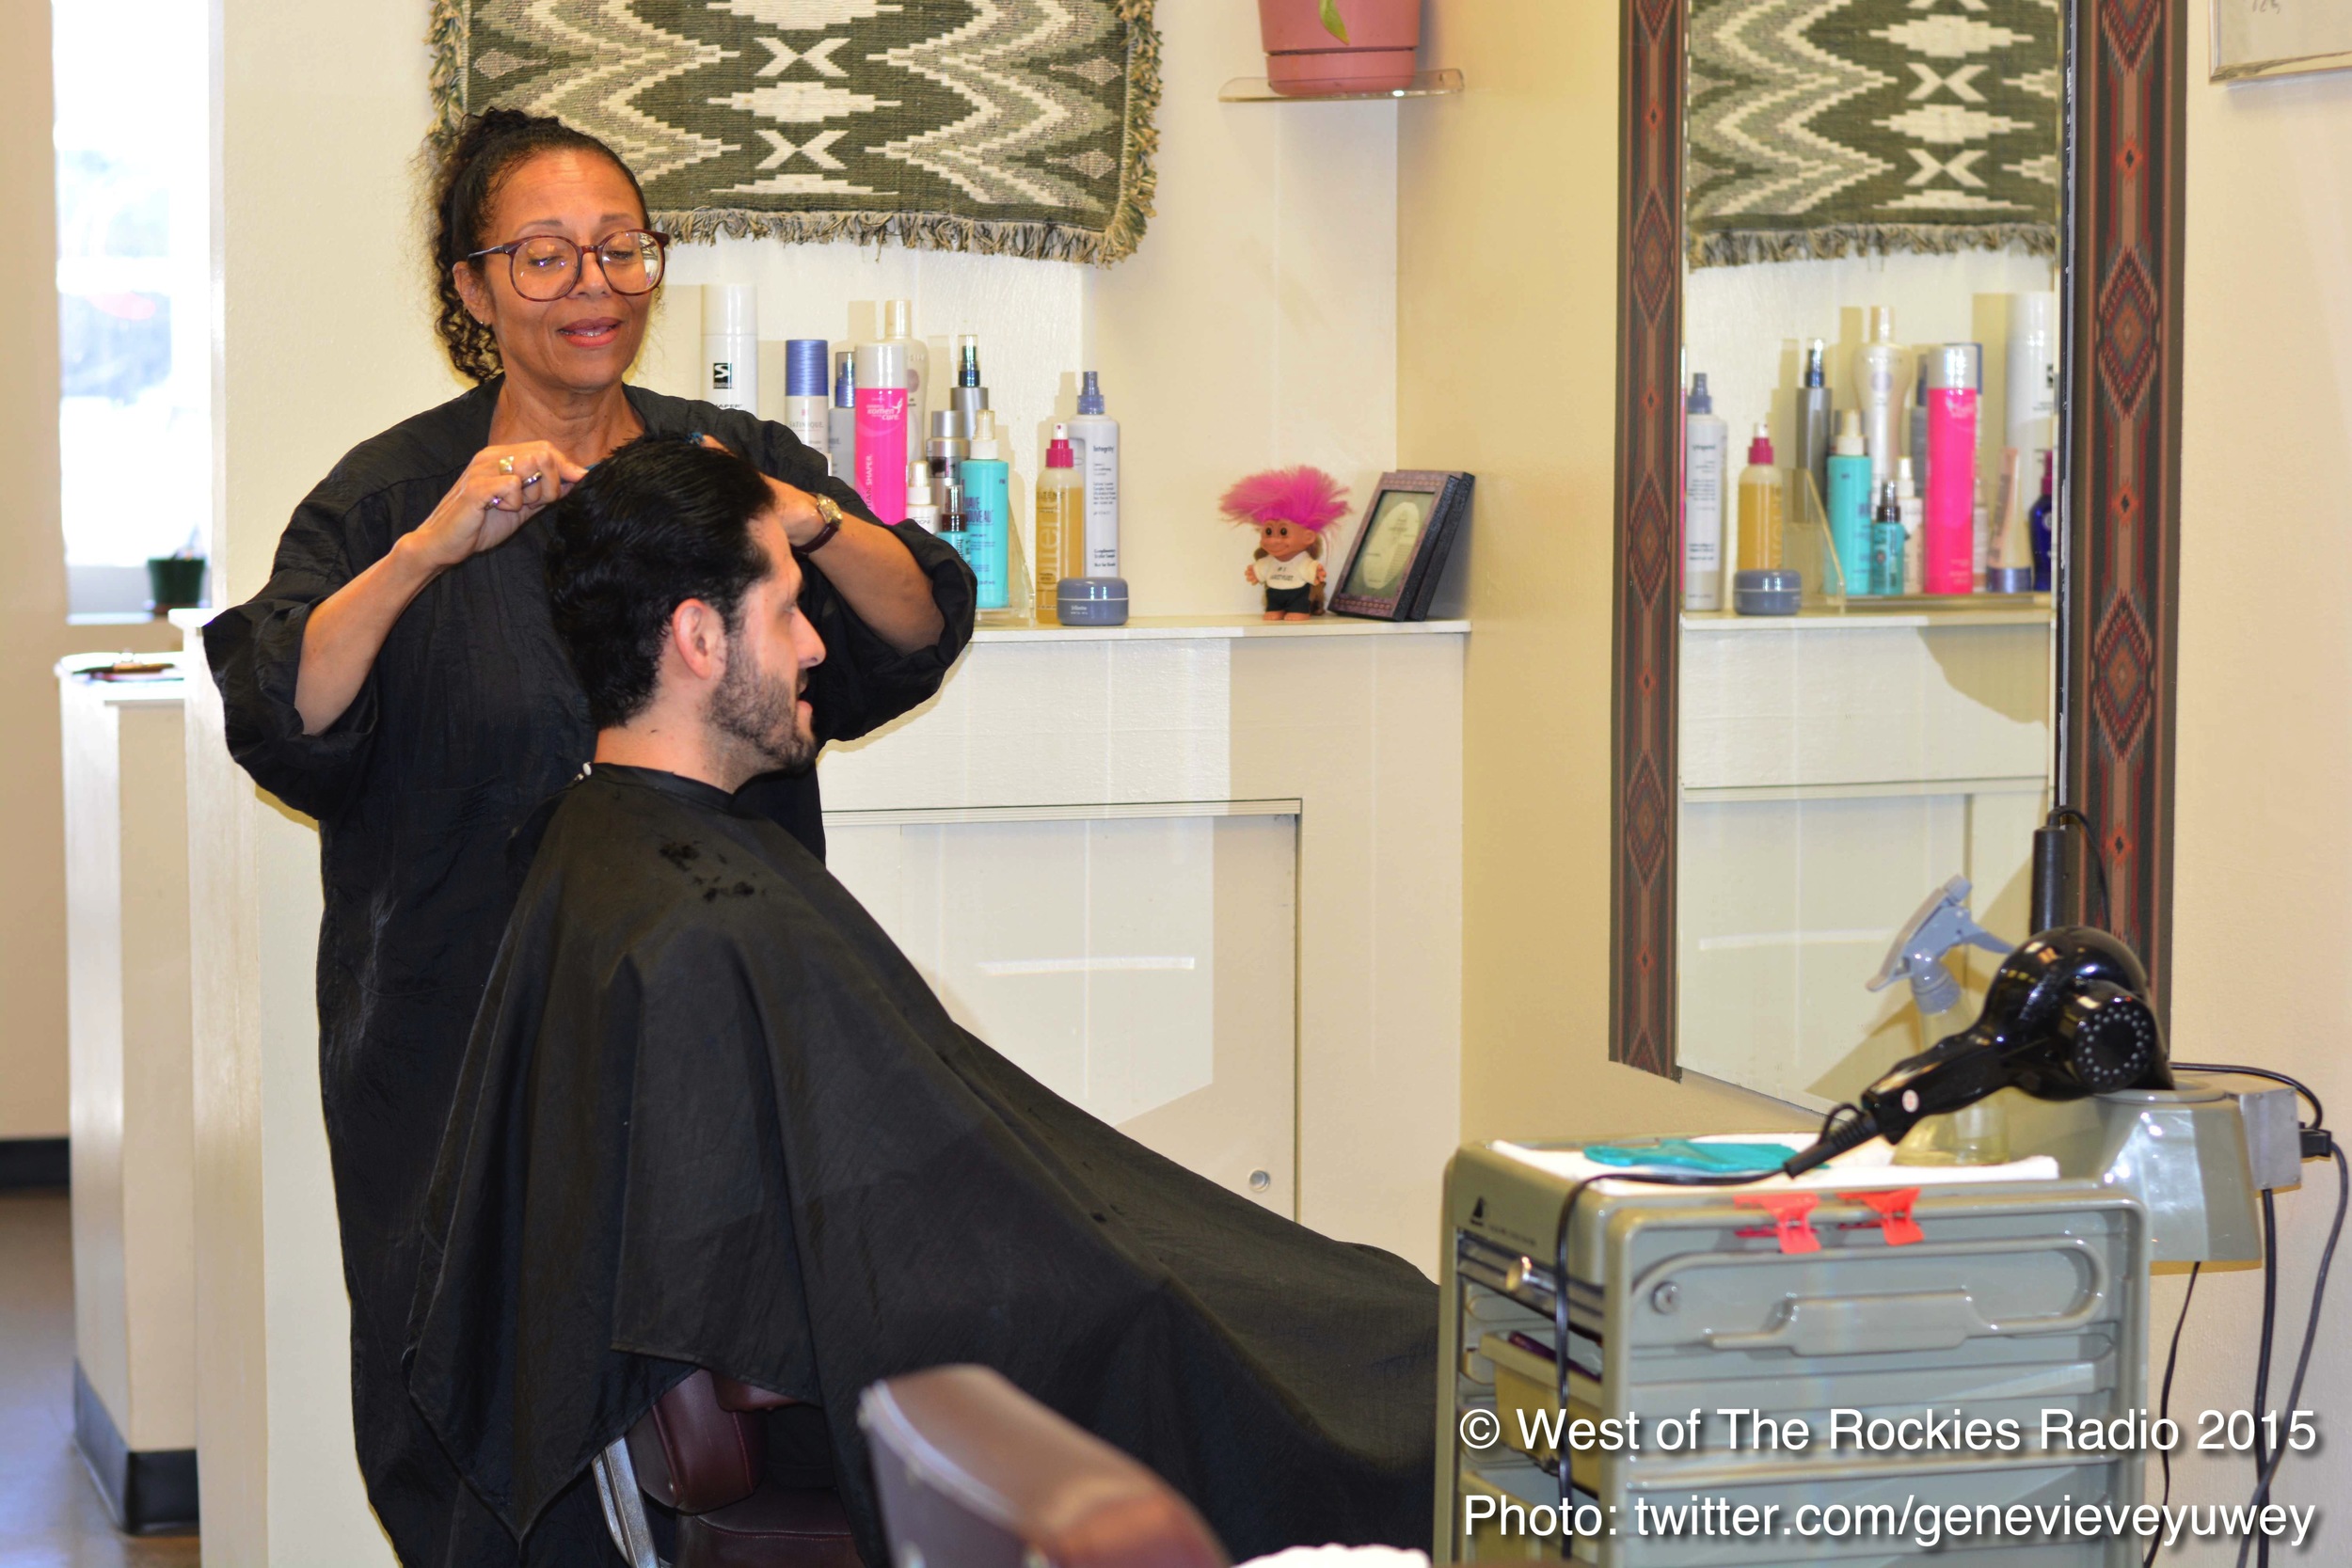 Frank getting a haircut from Lynn at Shear Perfection.